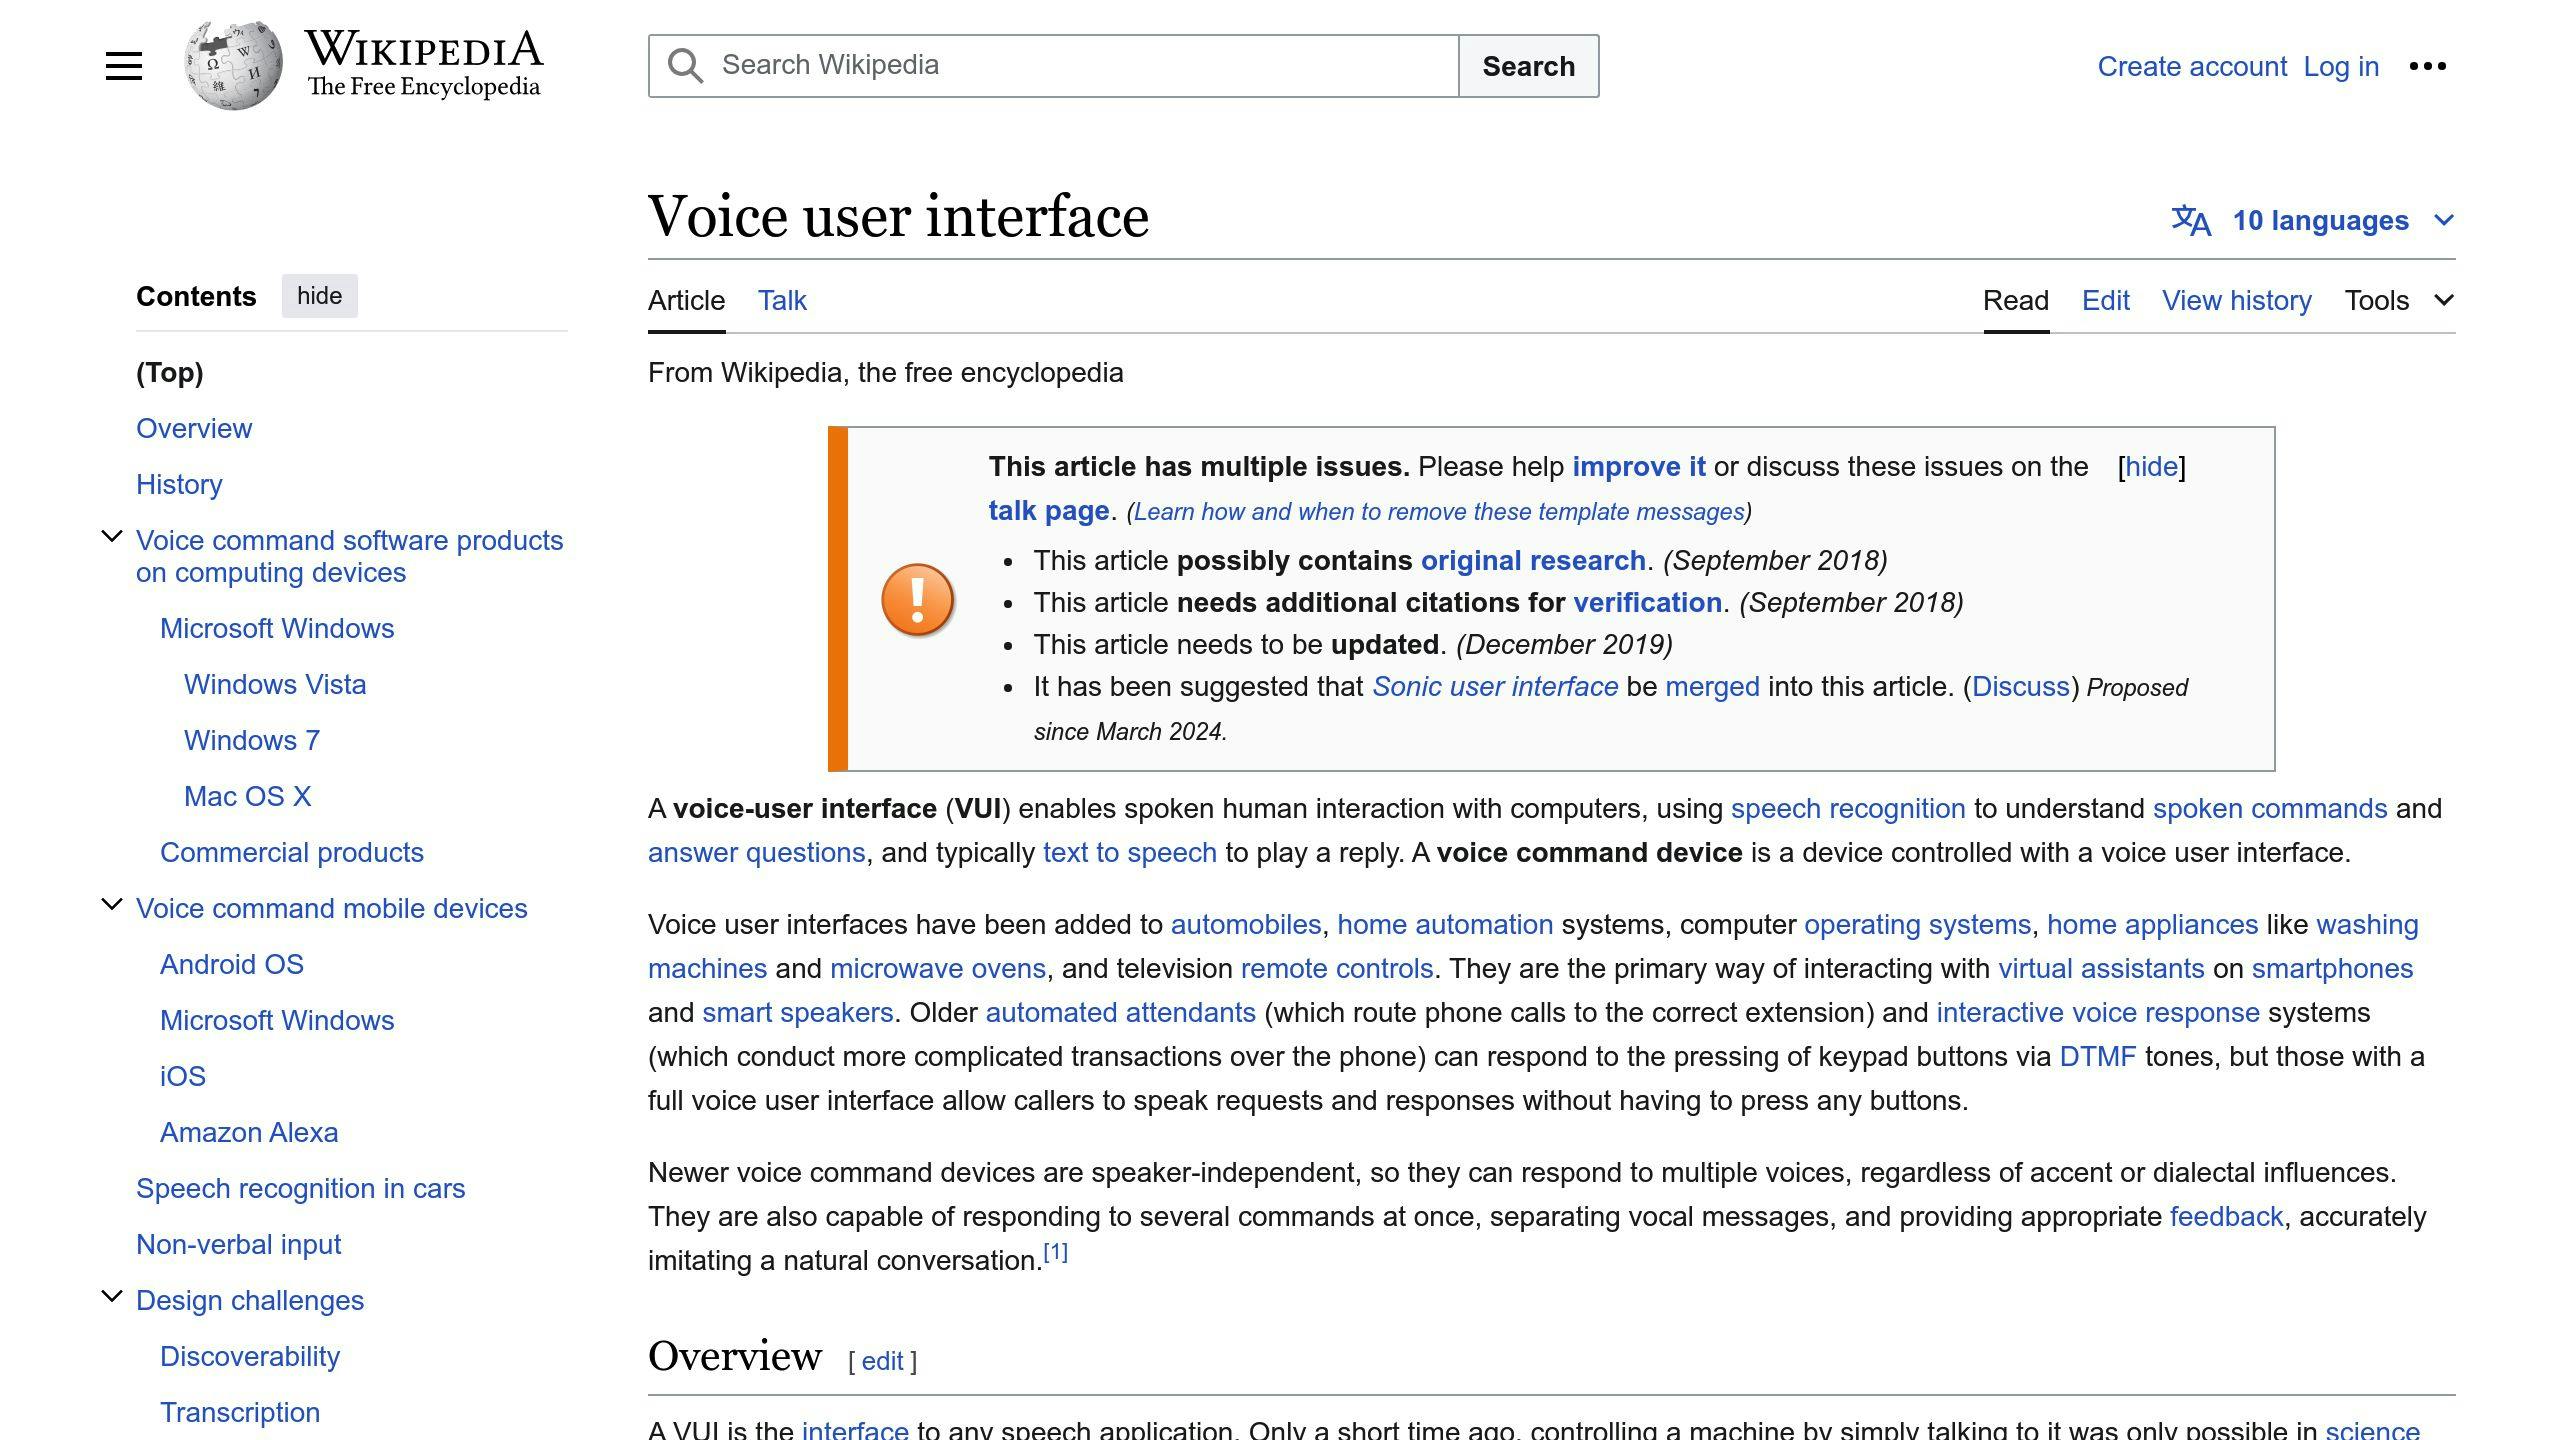 Voice User Interface